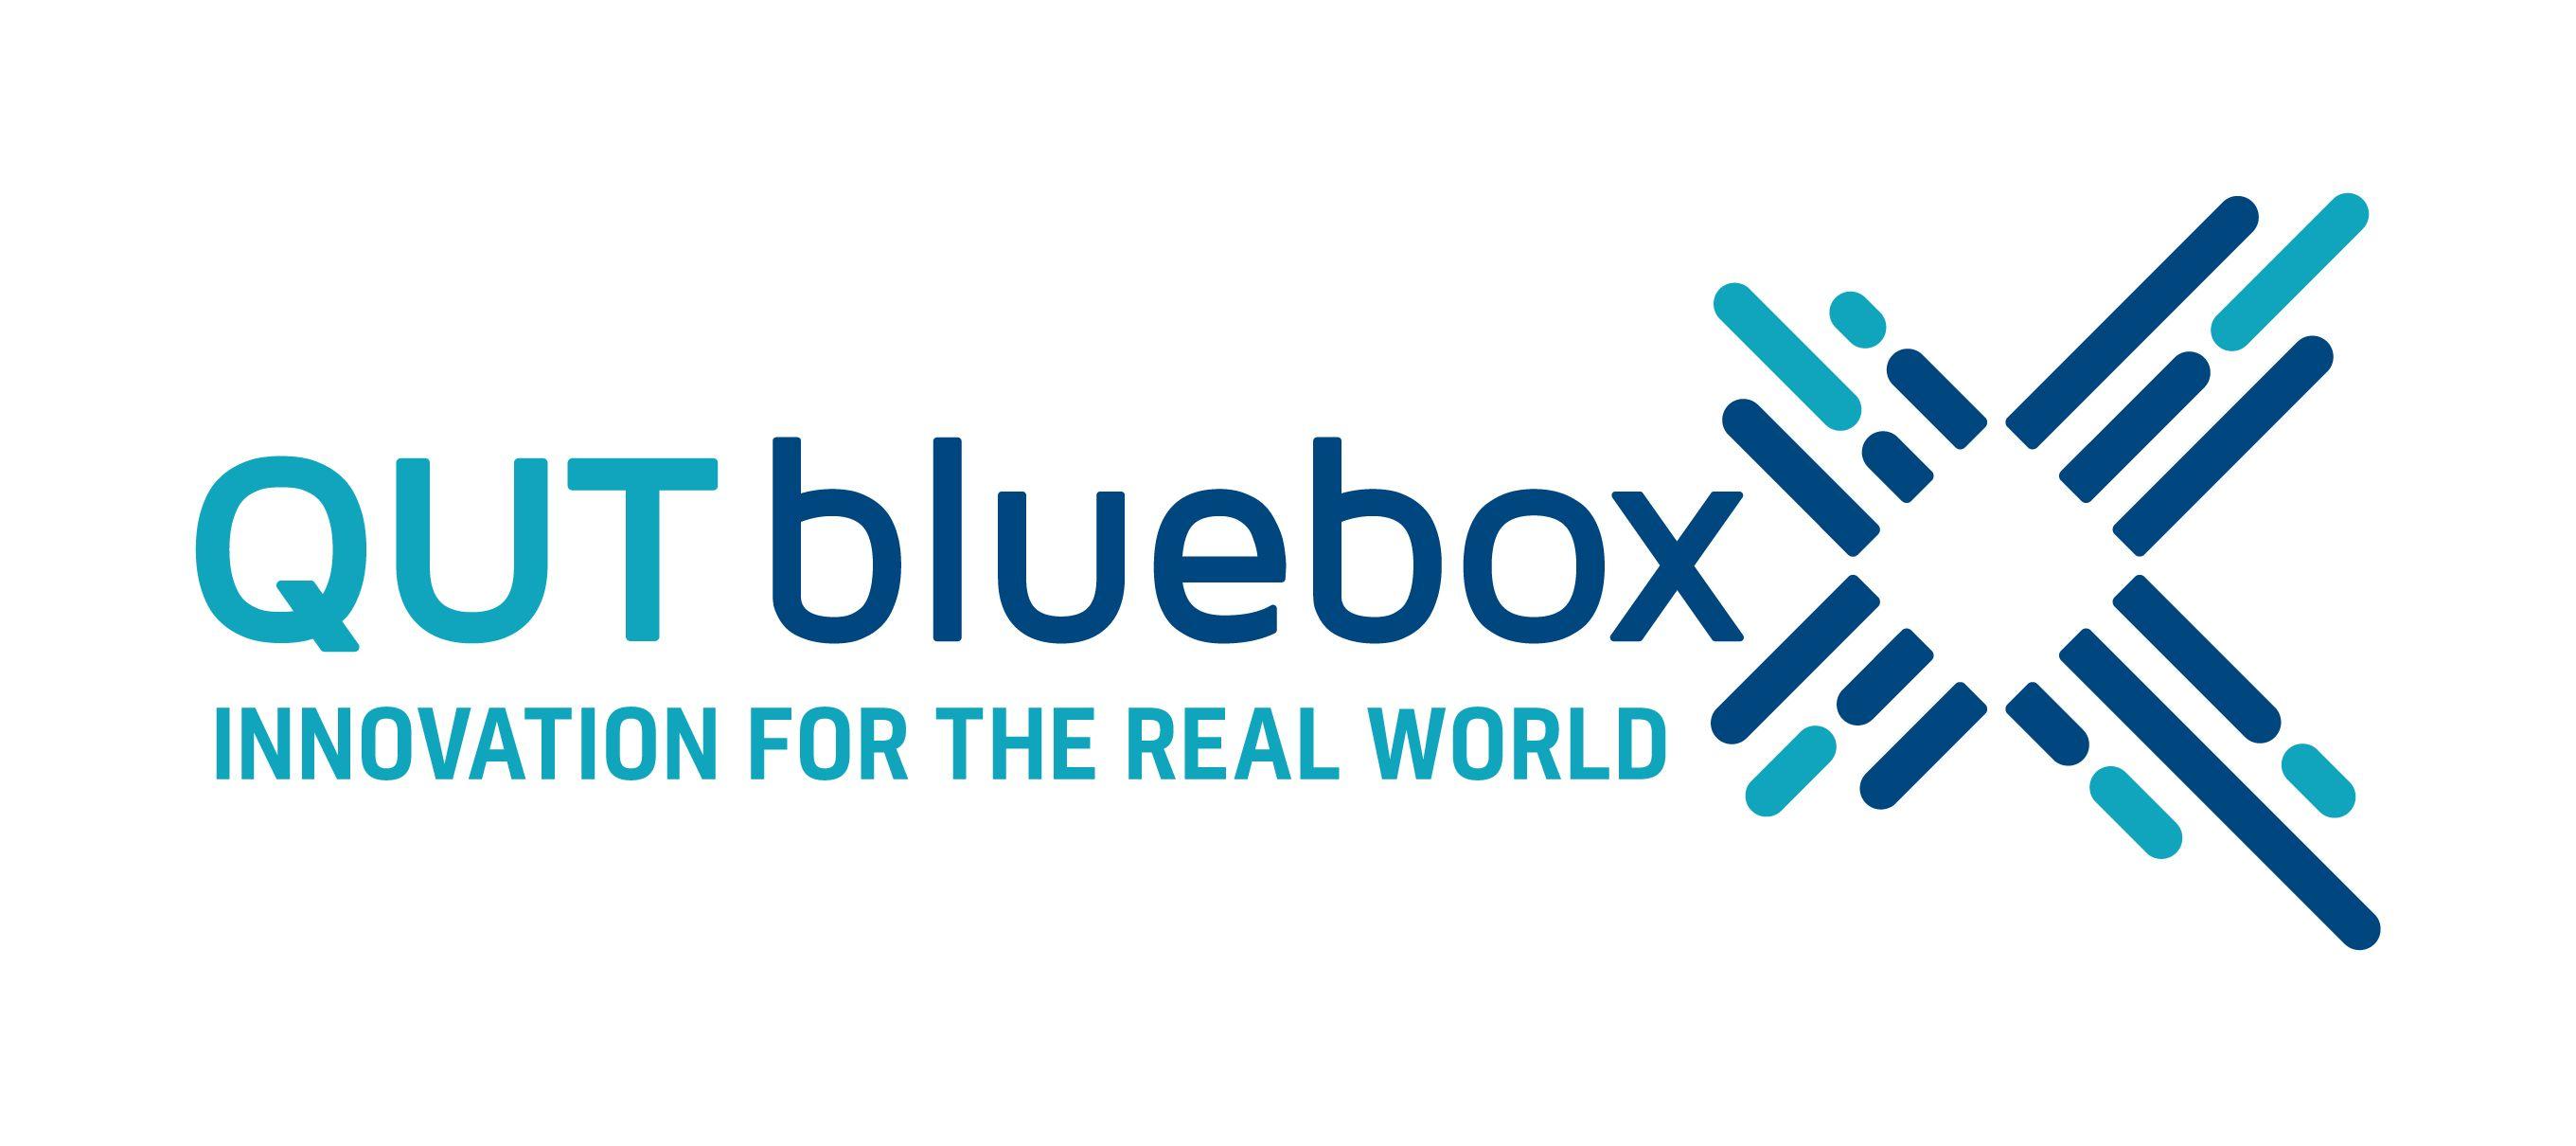 Blue Box Logo - Branding - QUT bluebox